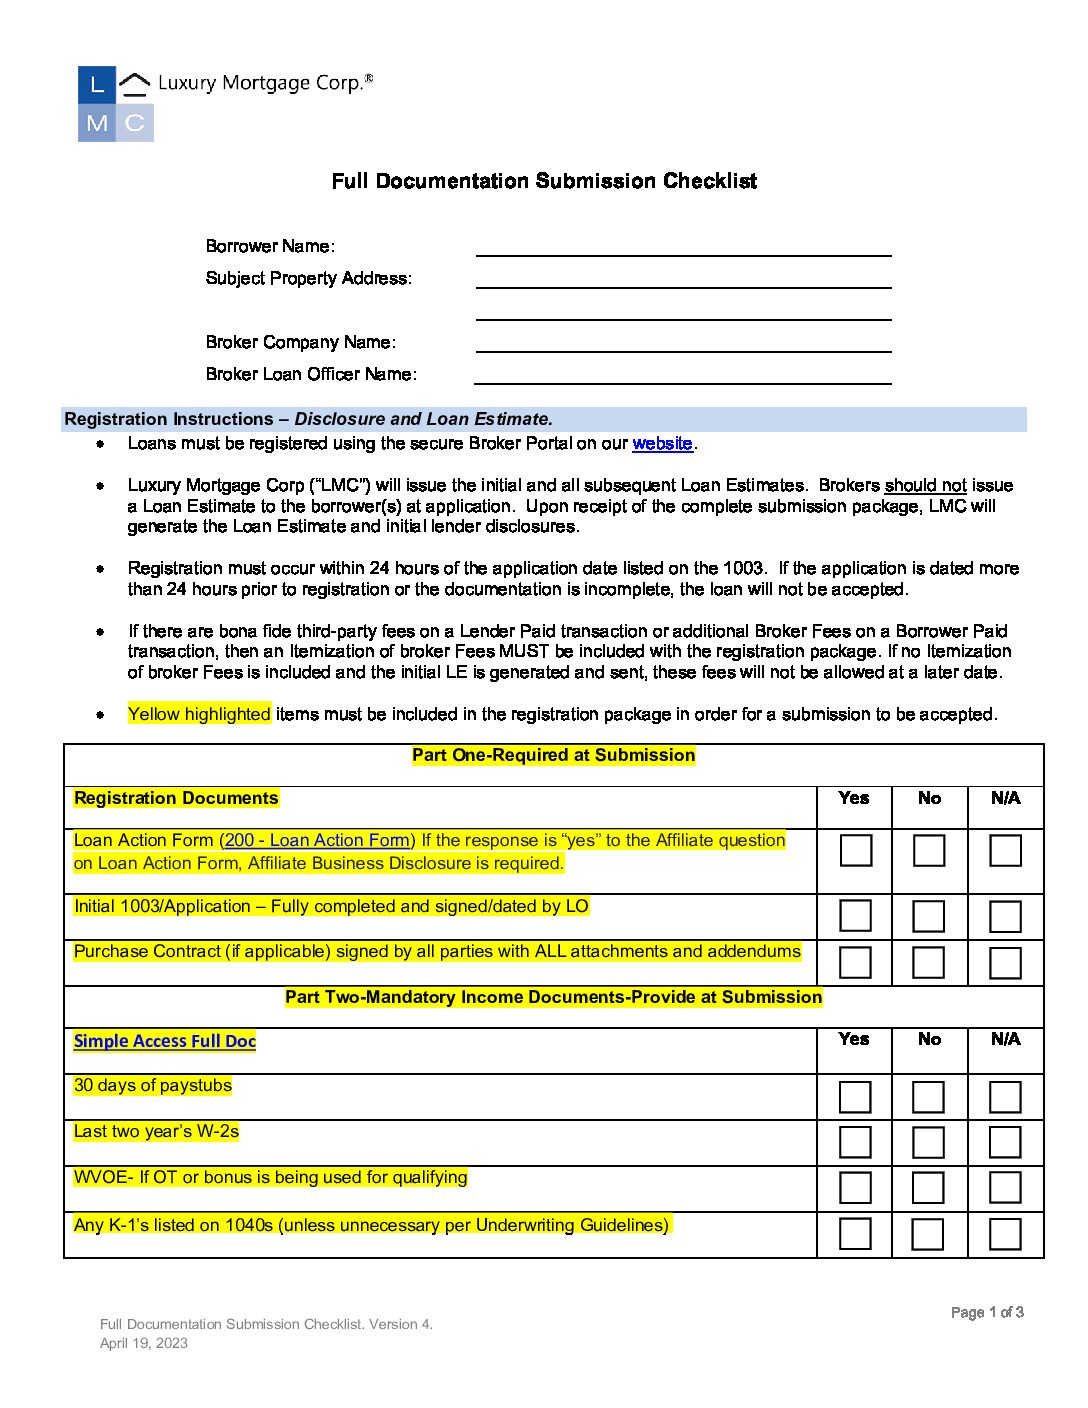 Full Documentation Submission Checklist V.3